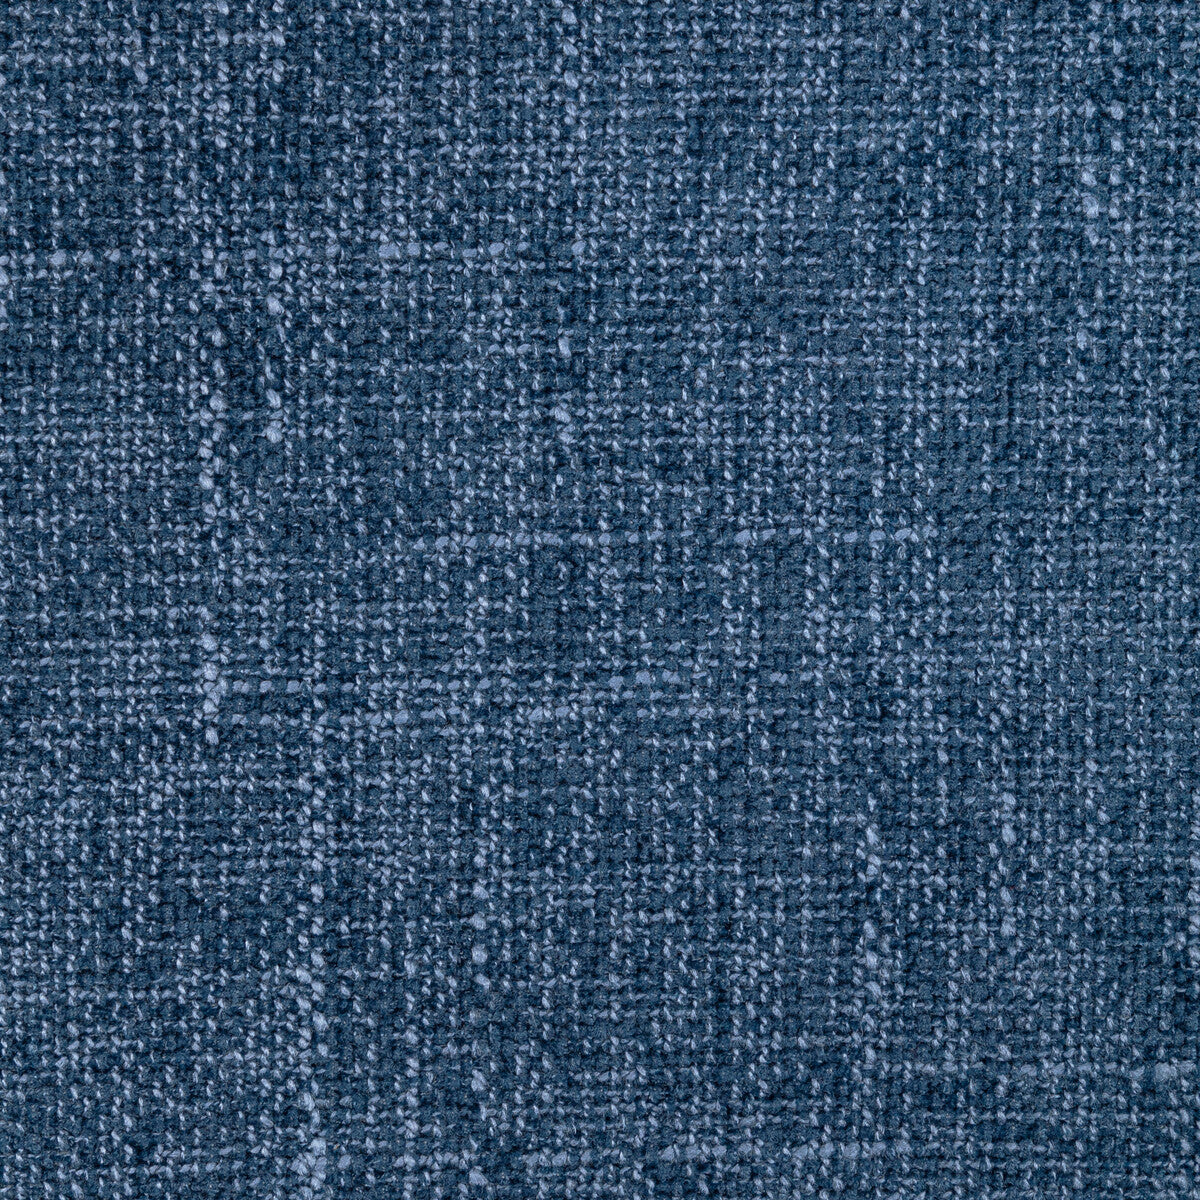 Kravet Smart fabric in 36579-155 color - pattern 36579.155.0 - by Kravet Smart in the Performance Kravetarmor collection